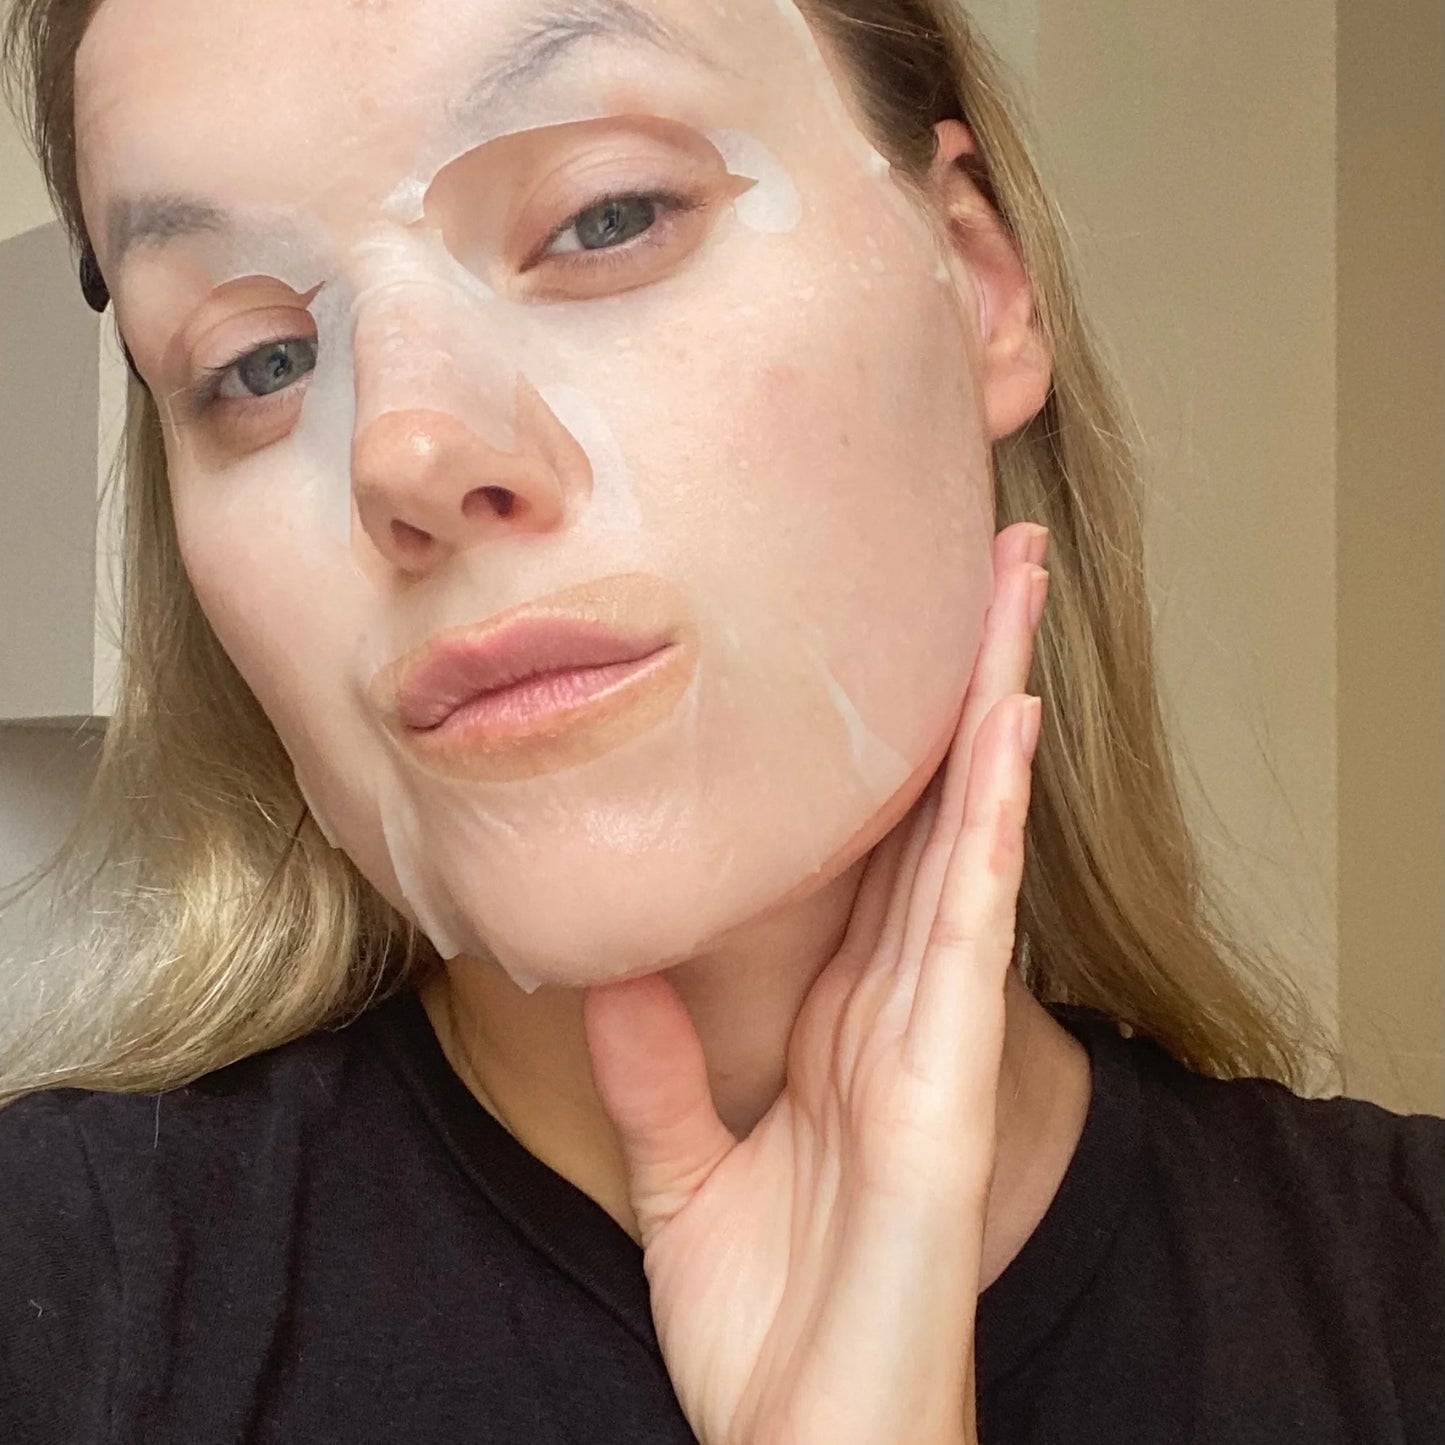 Beauty Pro HYALURONIC ACID Hydrating Facial Sheet Mask - 100% Biodegradable